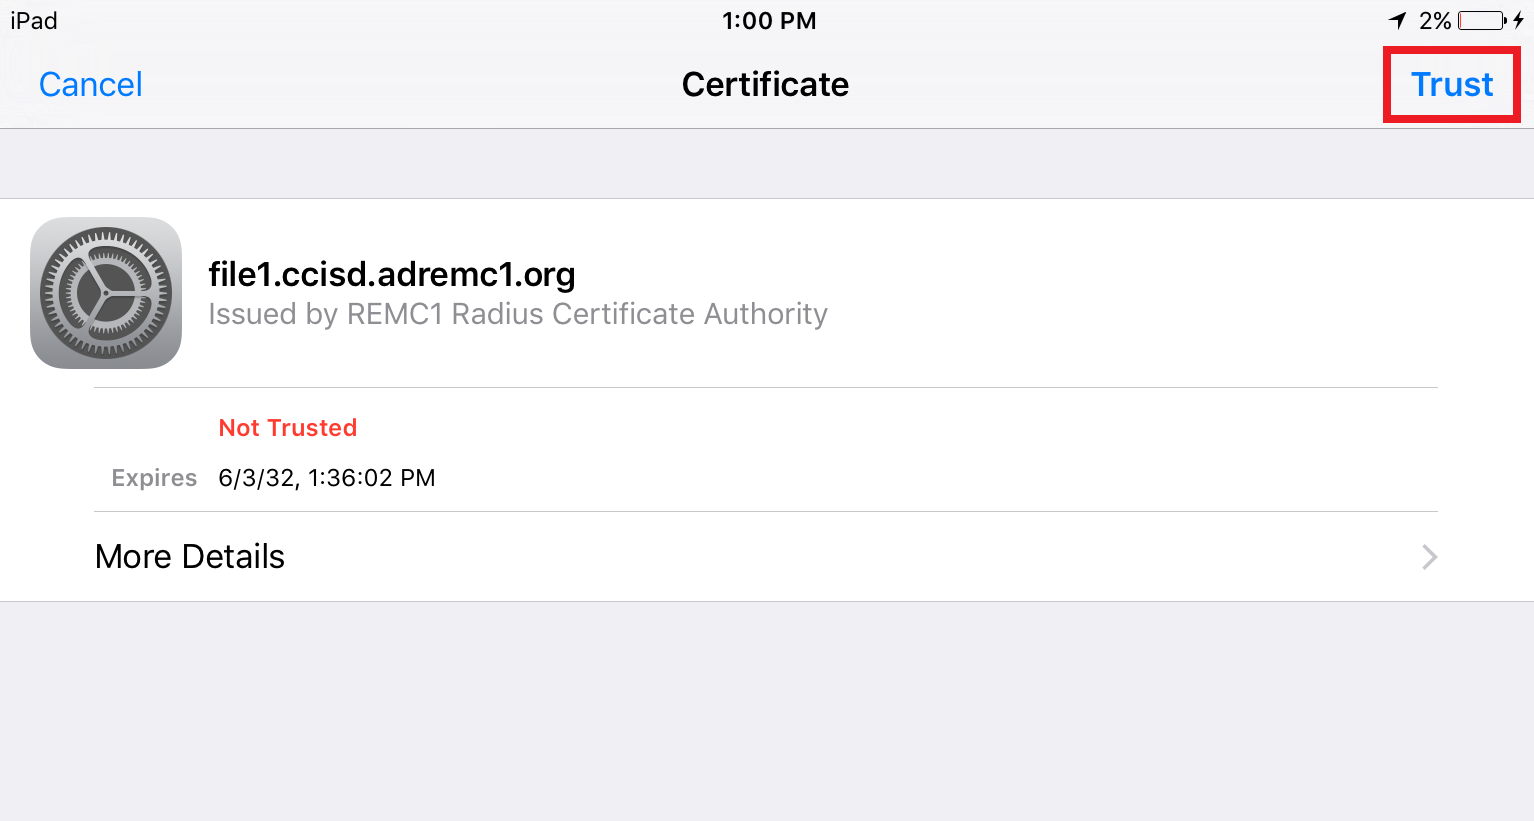 IOS WIFI Network Certificate Display